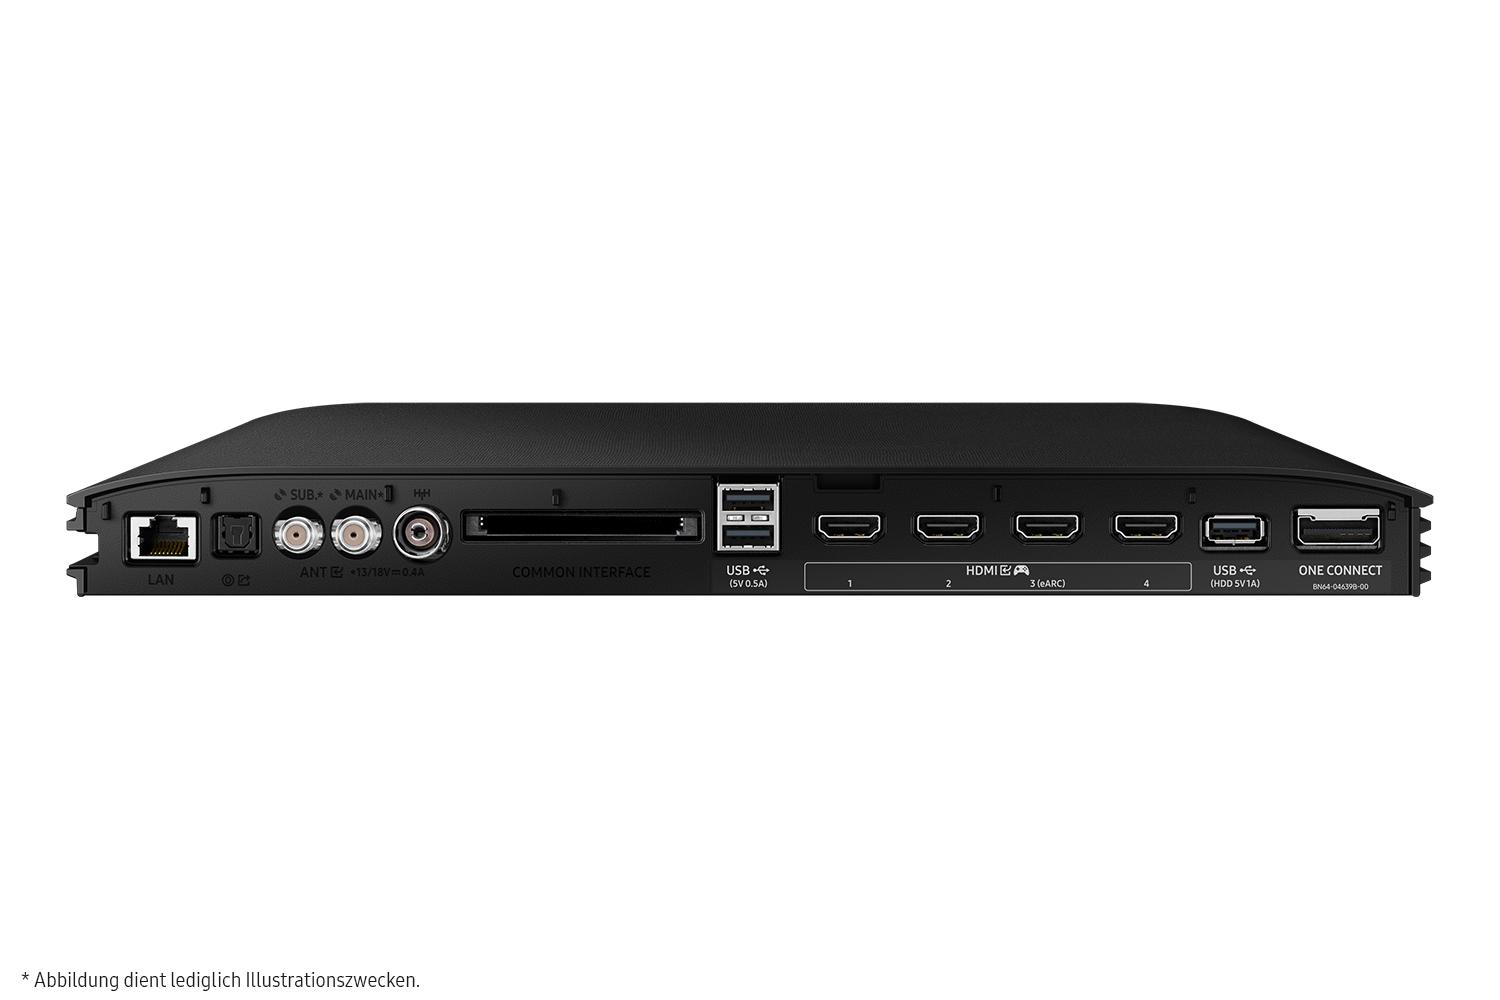 Neo 189 SMART UHD / Zoll TV cm, 75 GQ75QN900C TV, (Flat, SAMSUNG QLED Tizen) 8K,